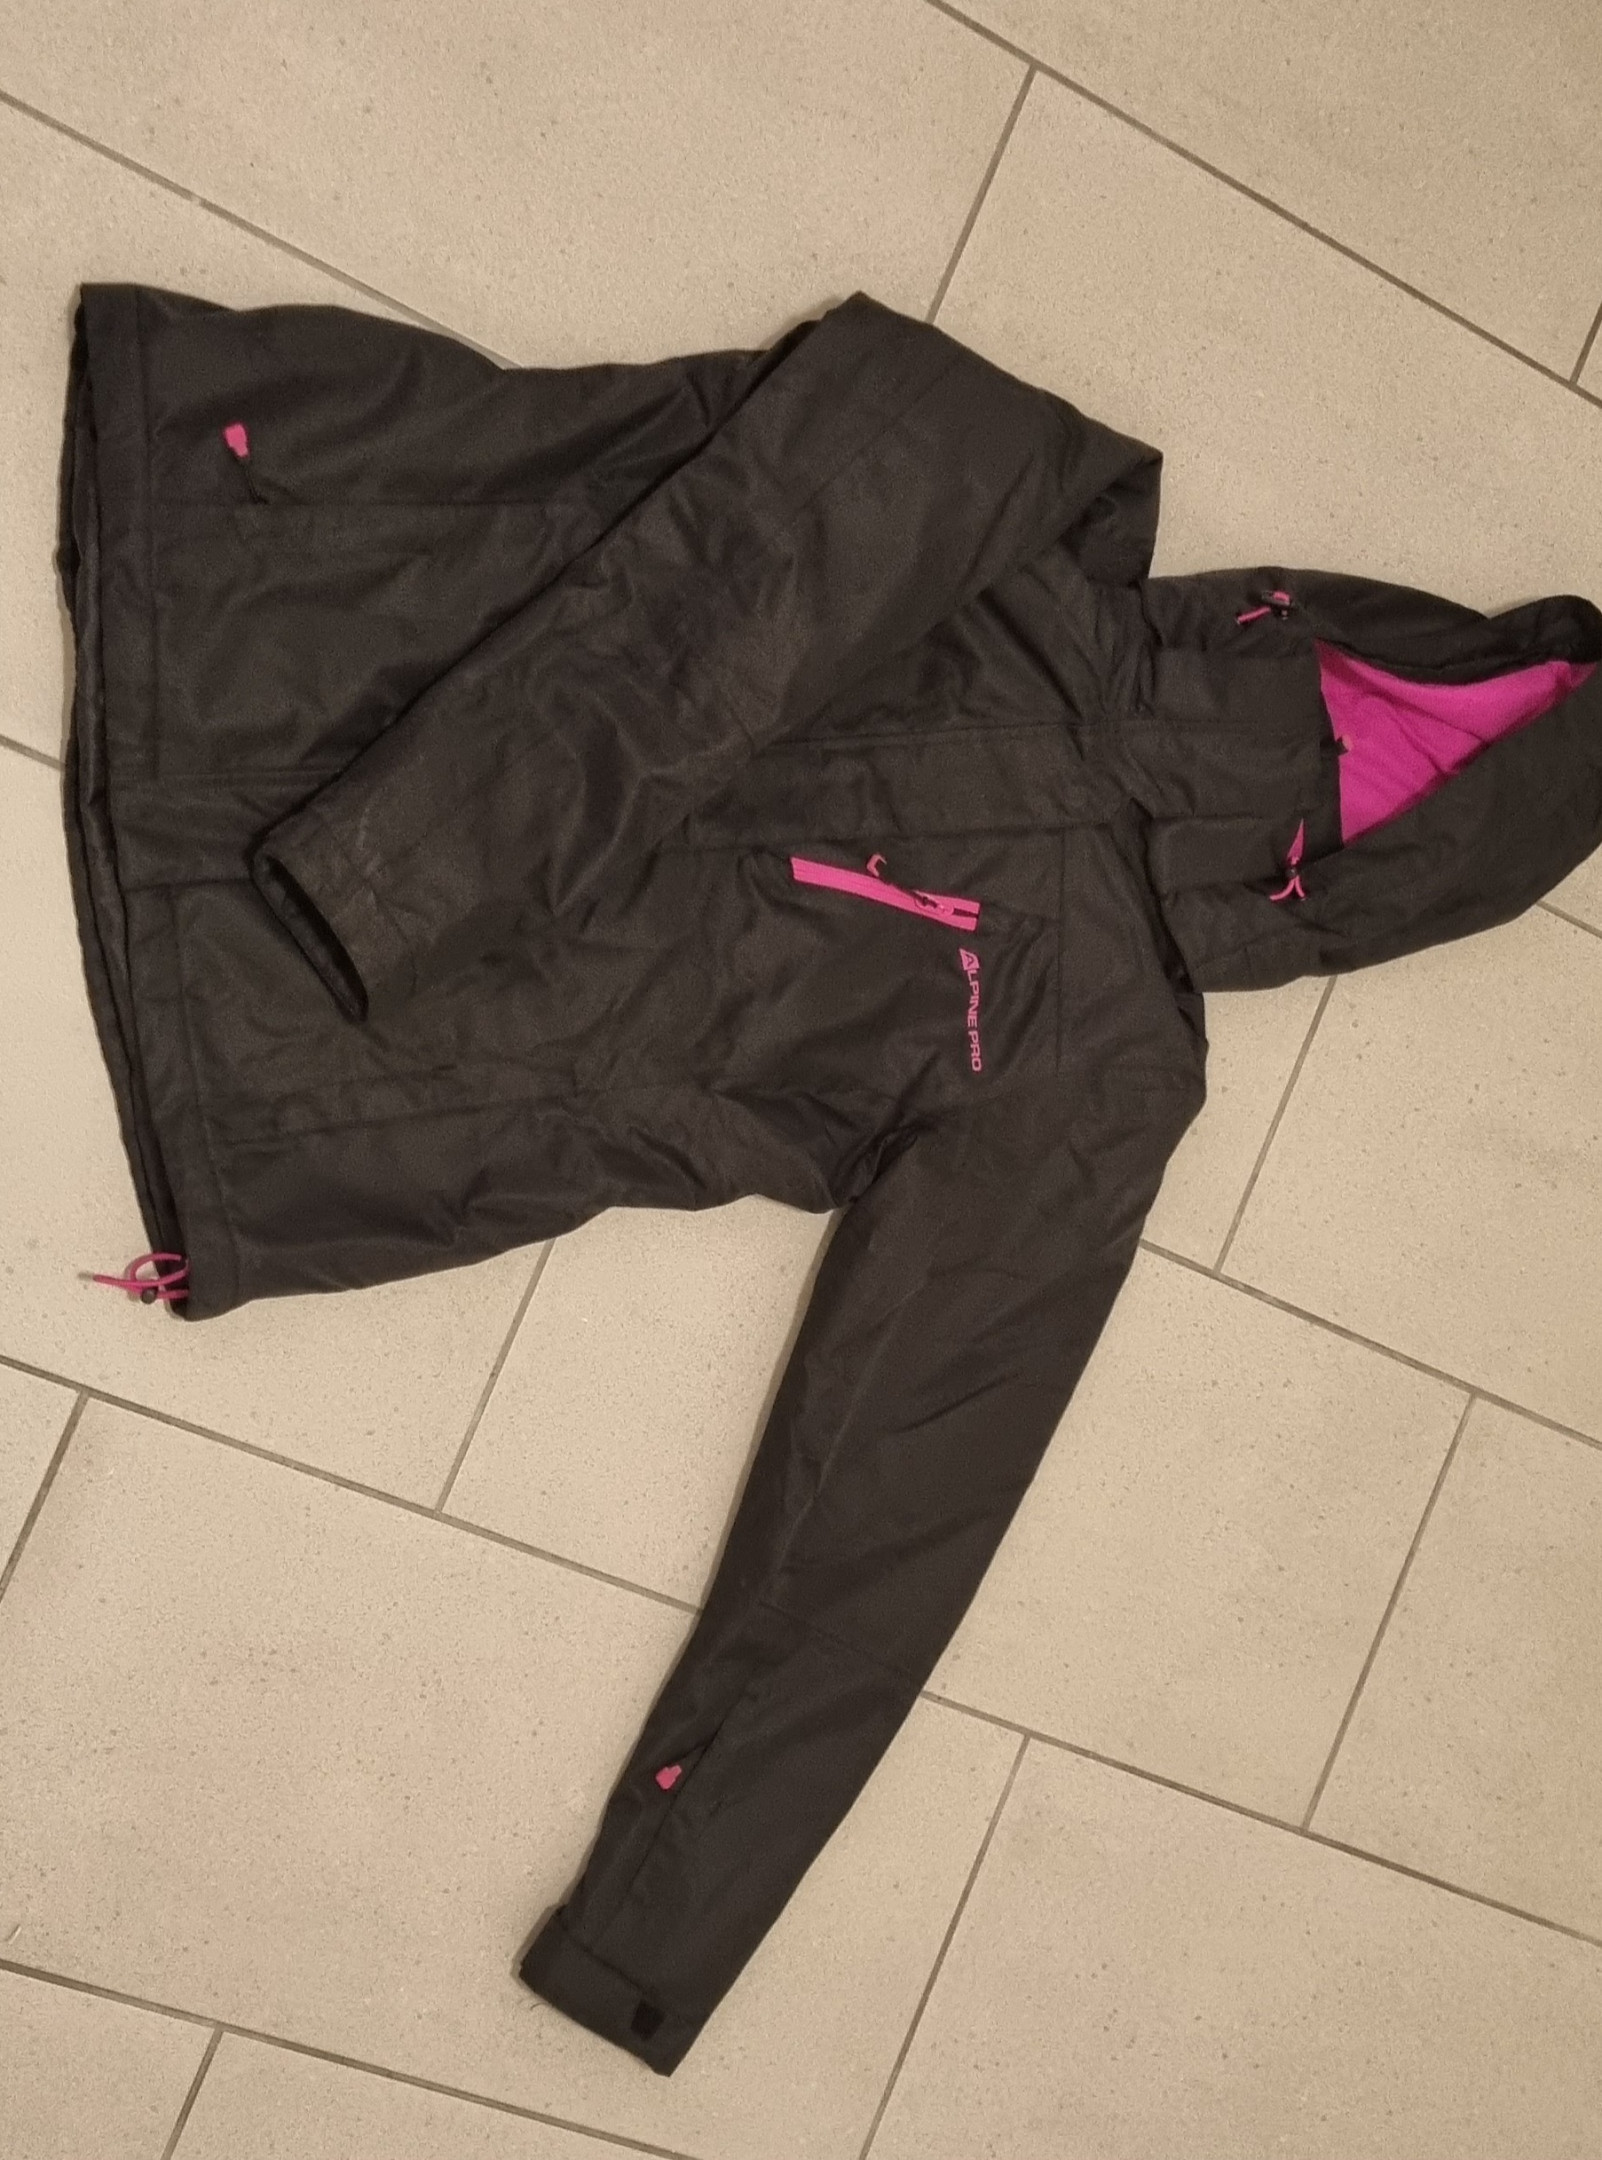 Alpin Pro winter sports jacket